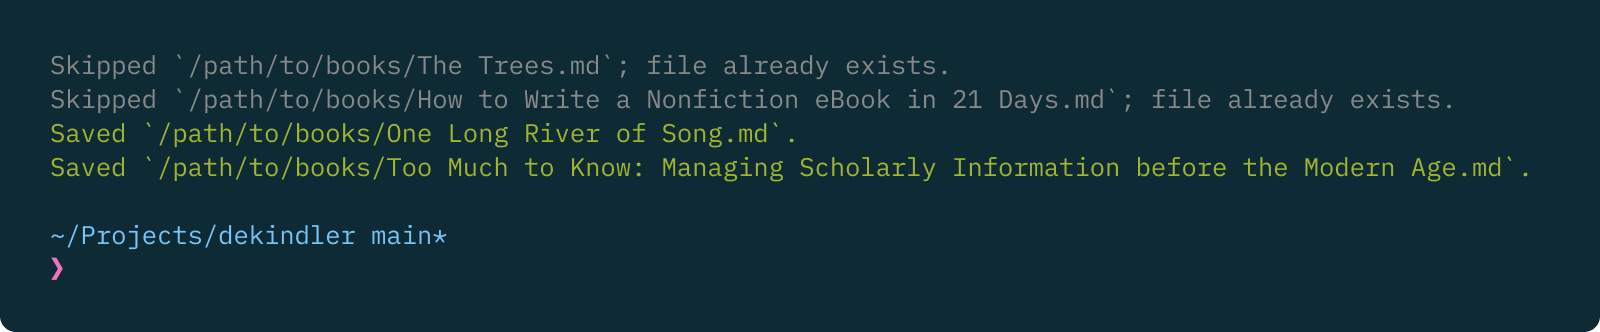 Terminal screenshot showing books skipped and new Markdown files written